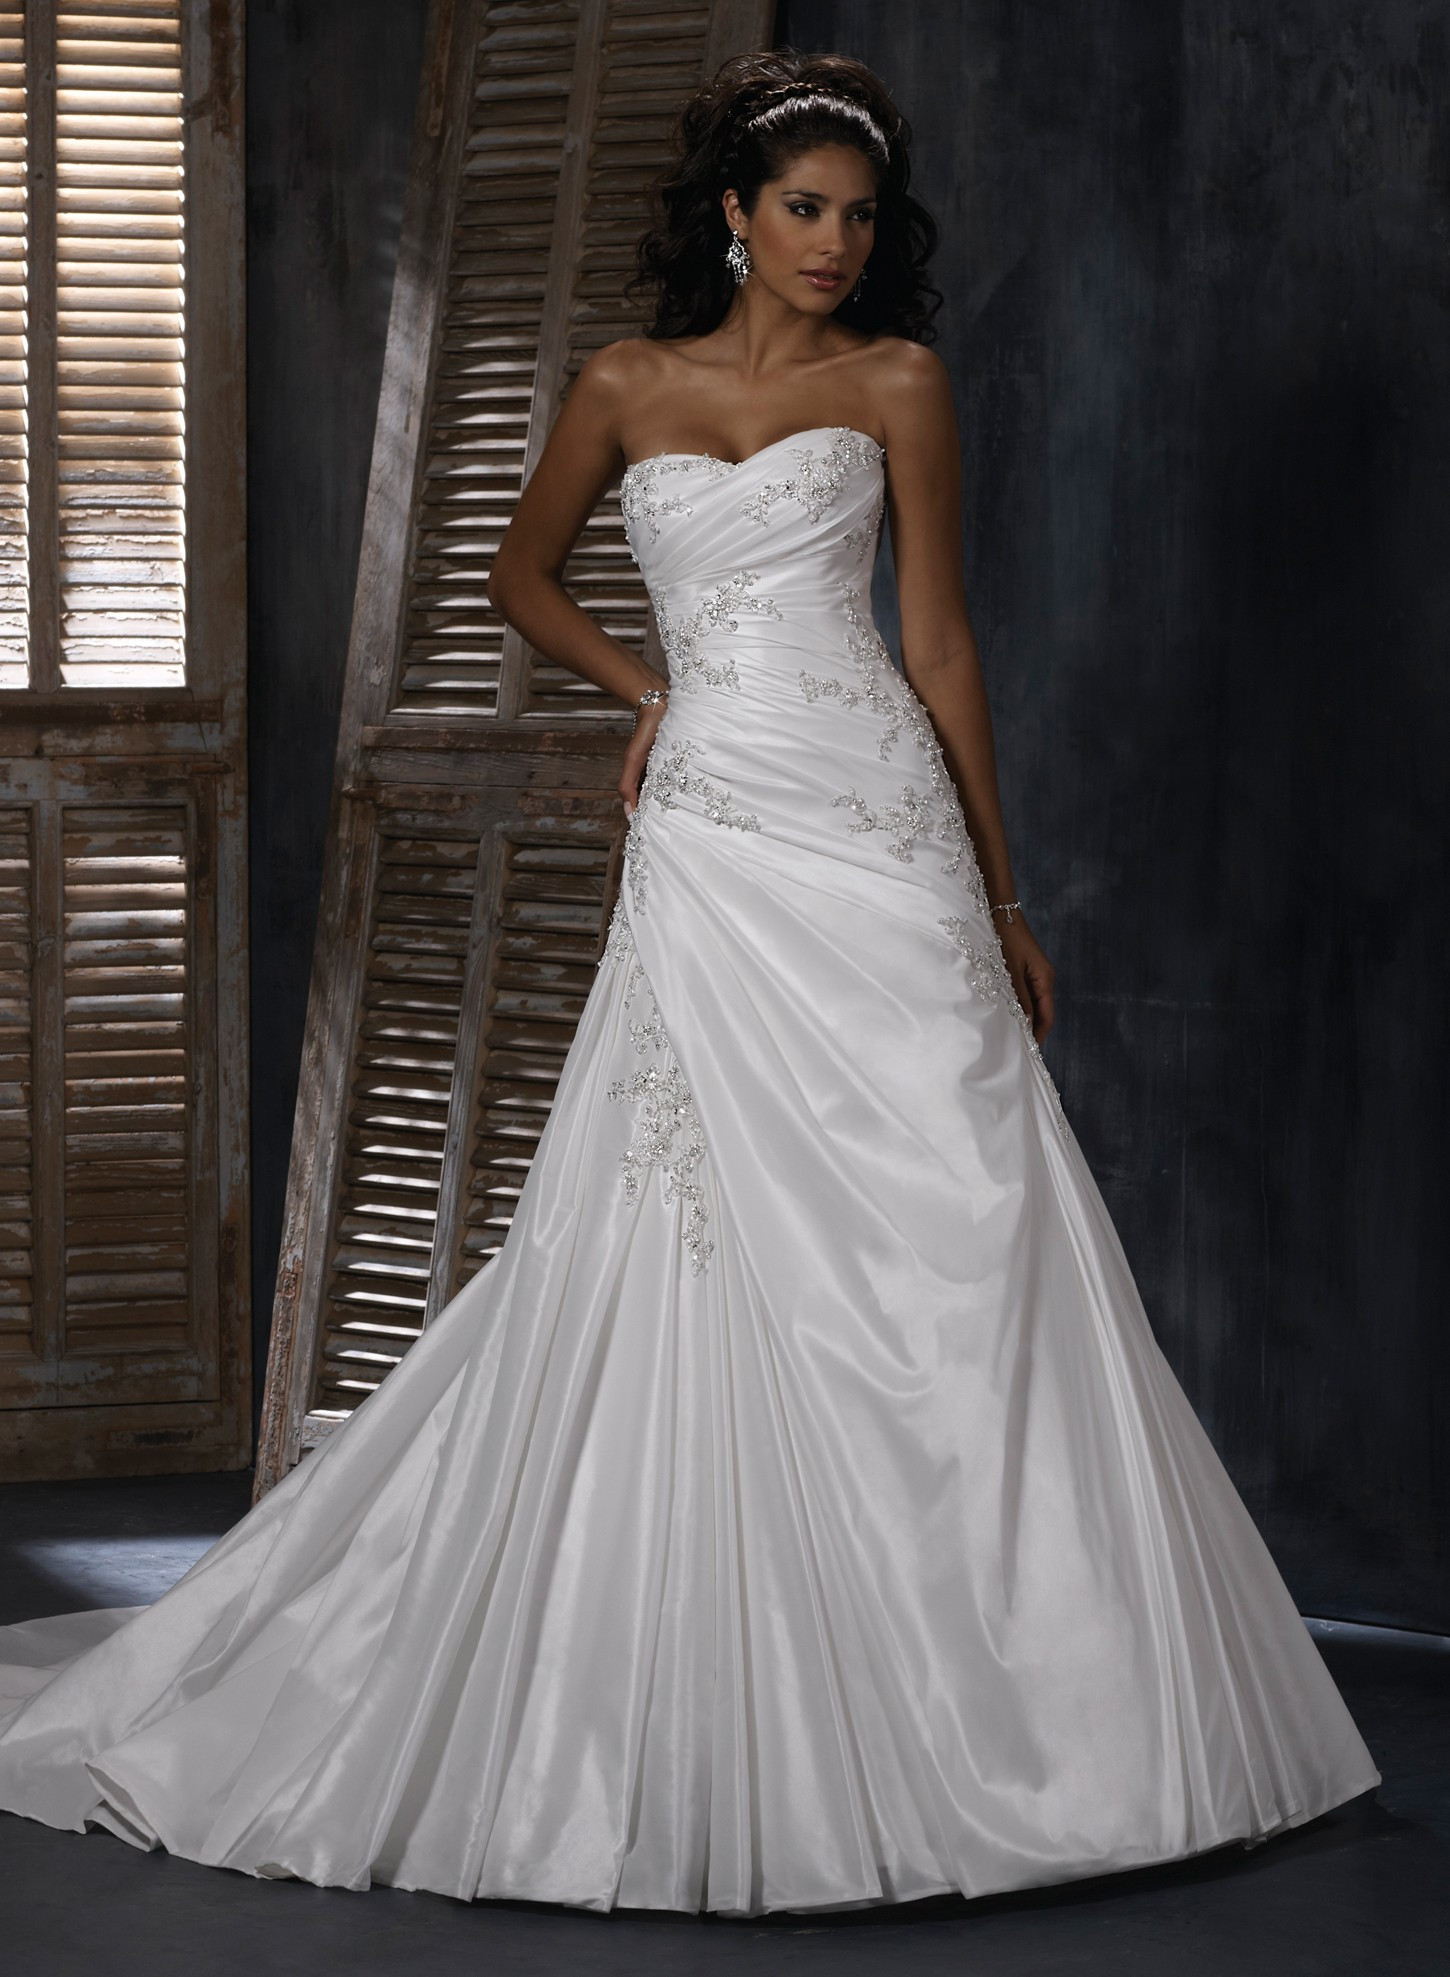 Wedding Dress Sweetheart Neckline
 21 Gorgeous A Line Wedding Dresses Ideas – The WoW Style